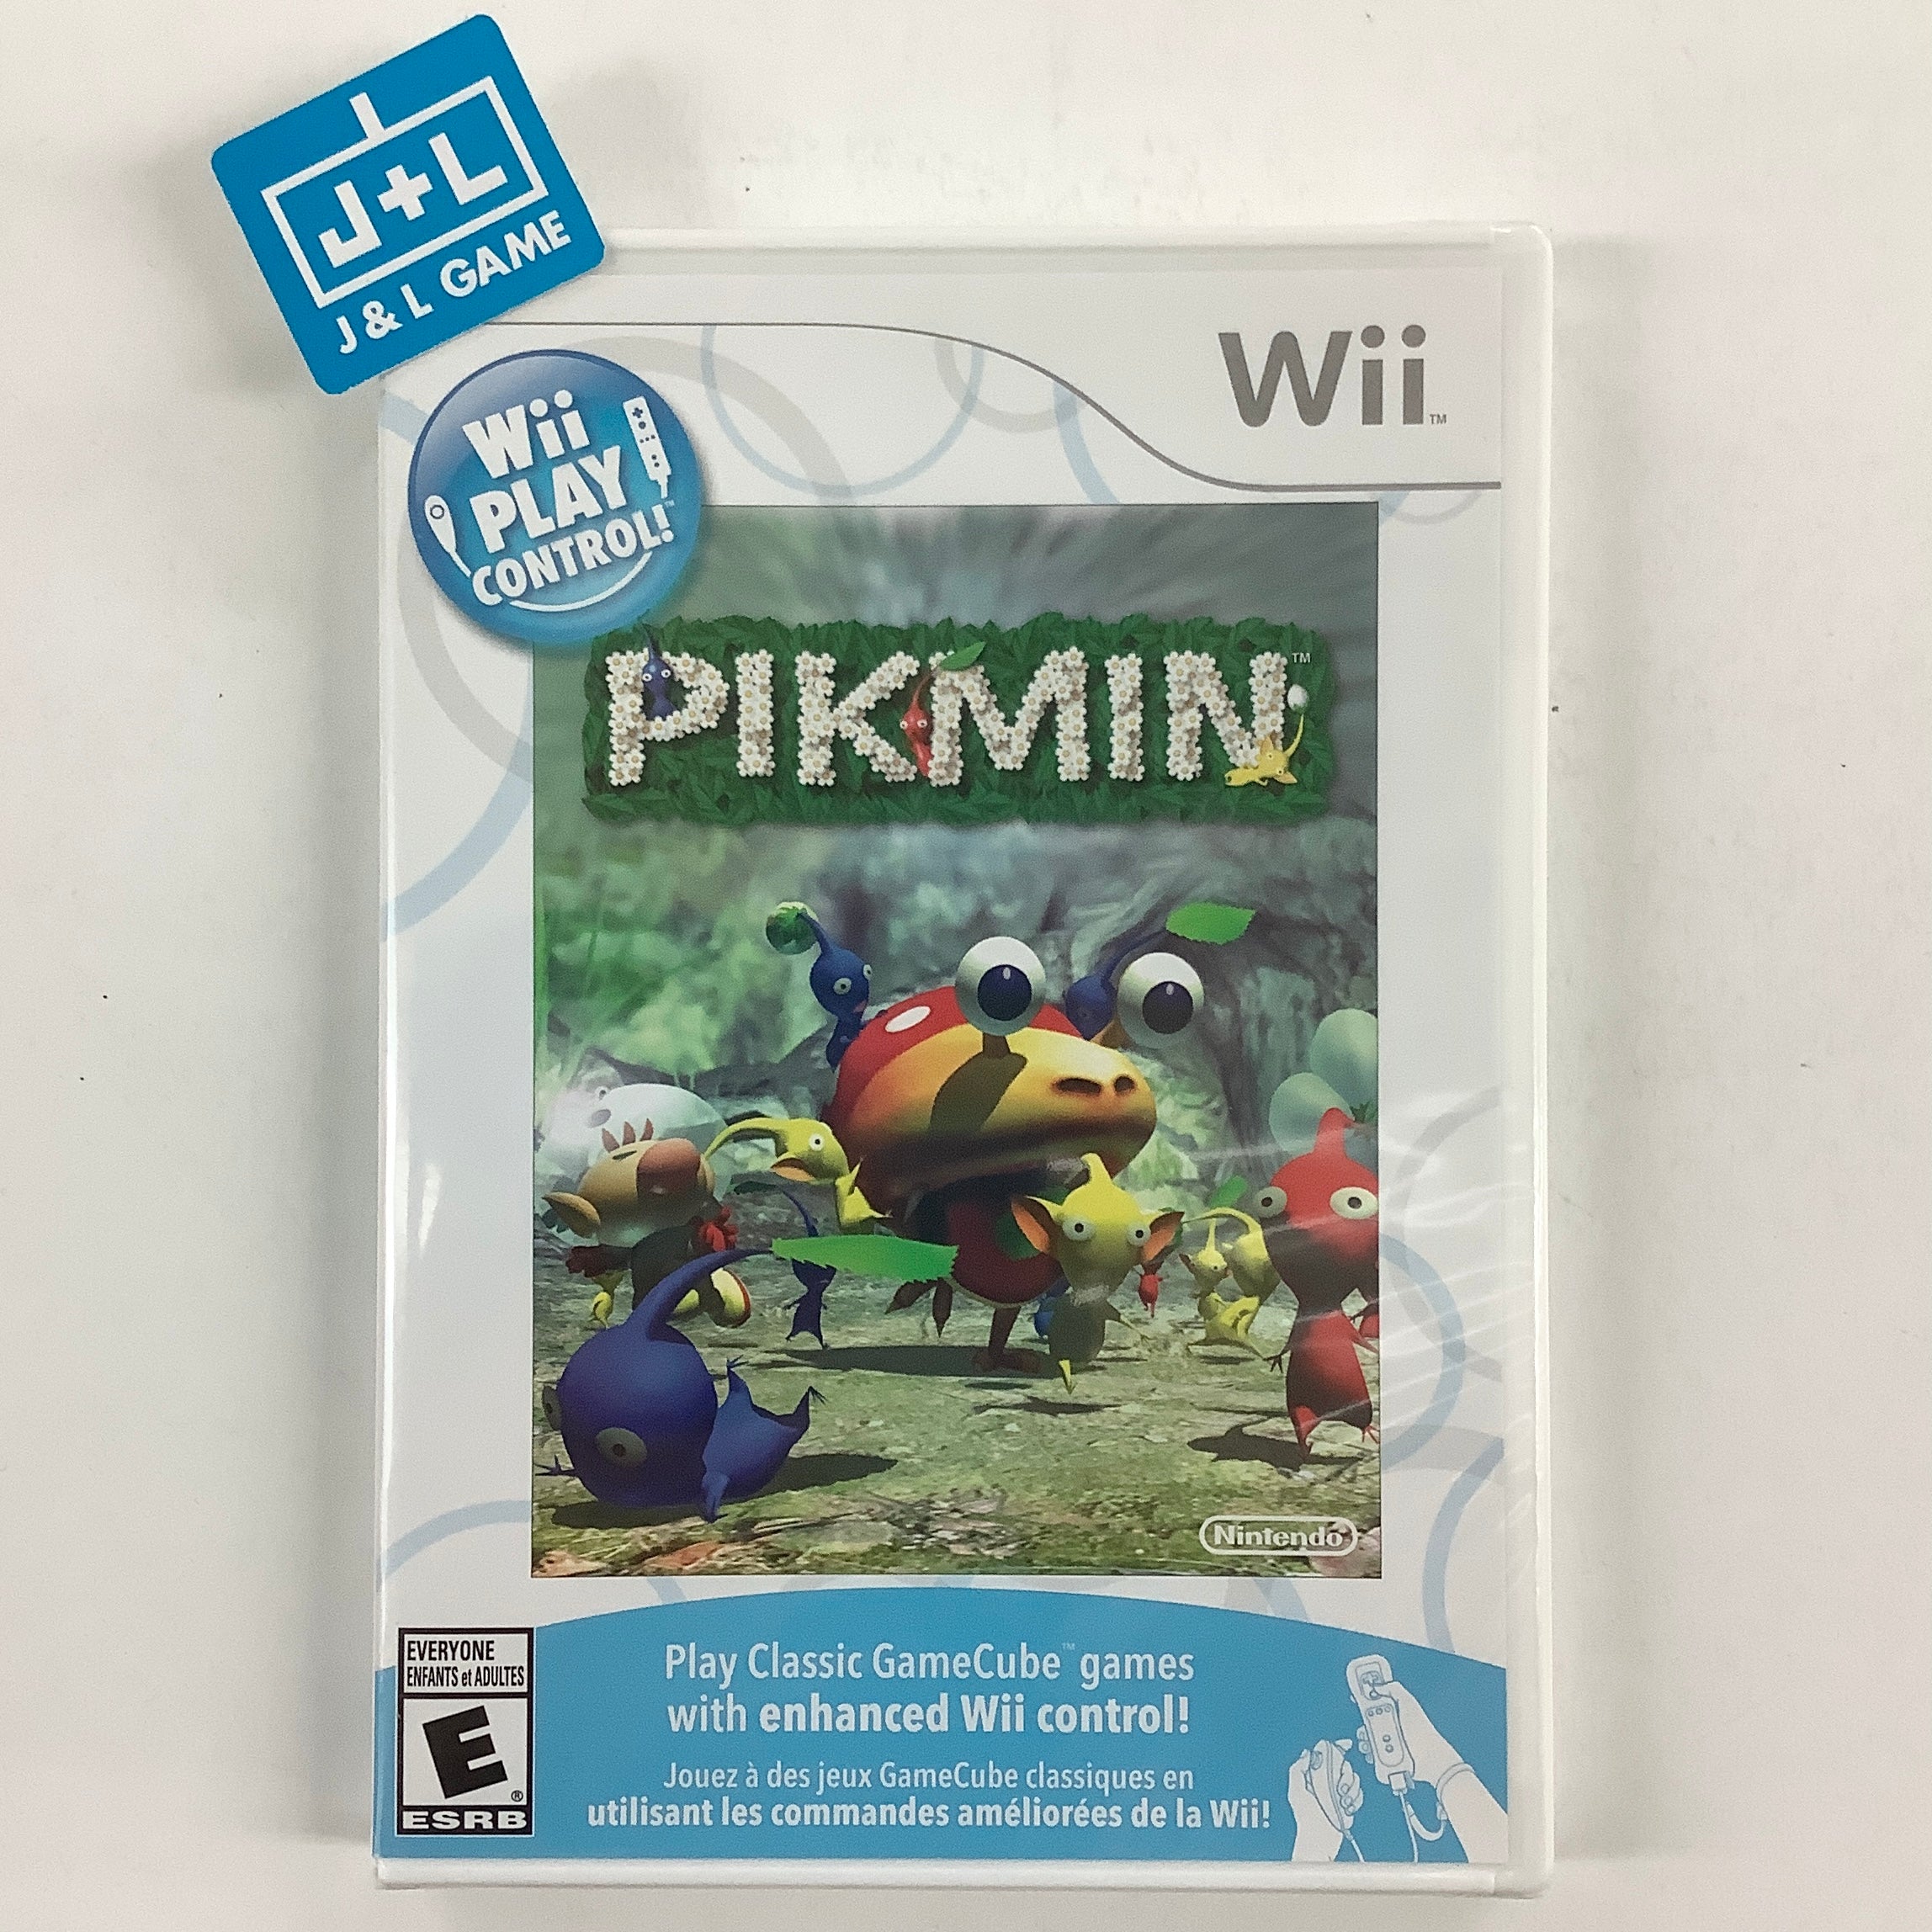 Pikmin - Nintendo Wii Video Games Nintendo   